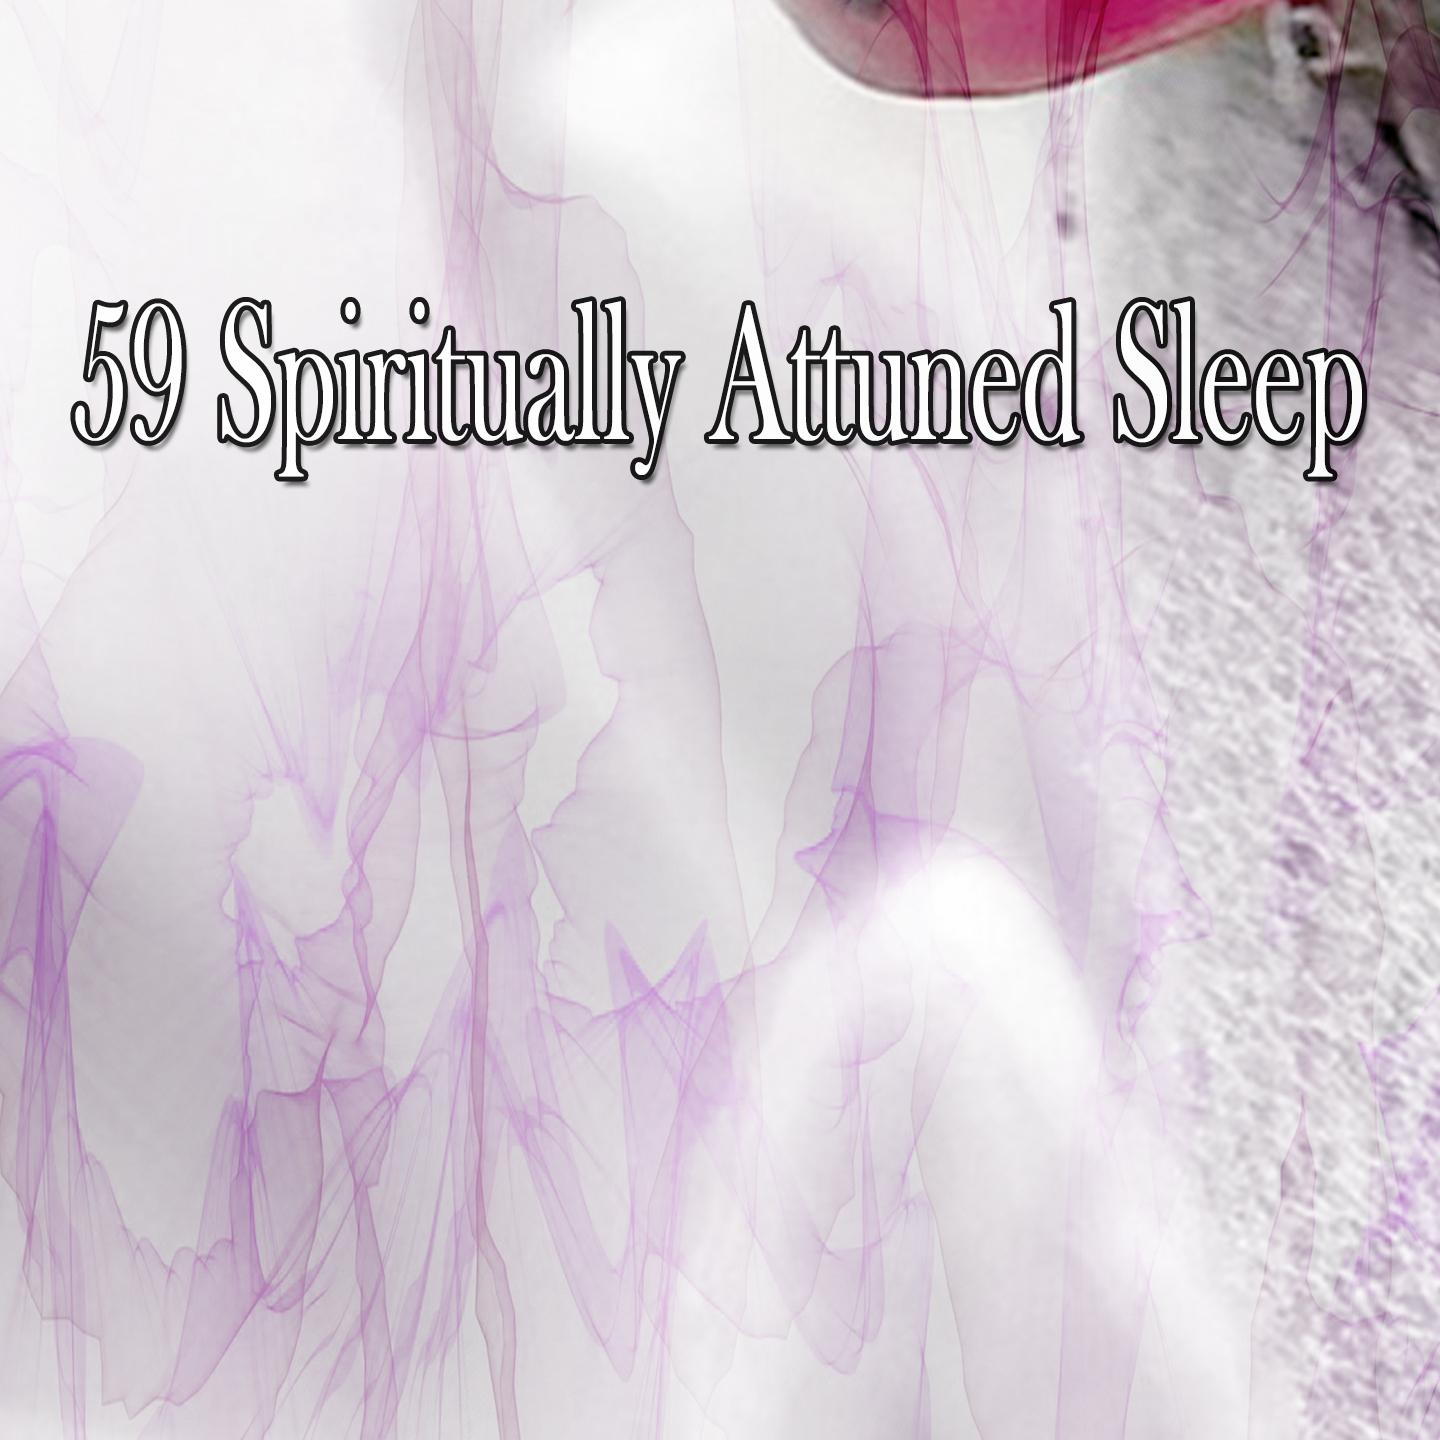 59 Spiritually Attuned Sleep